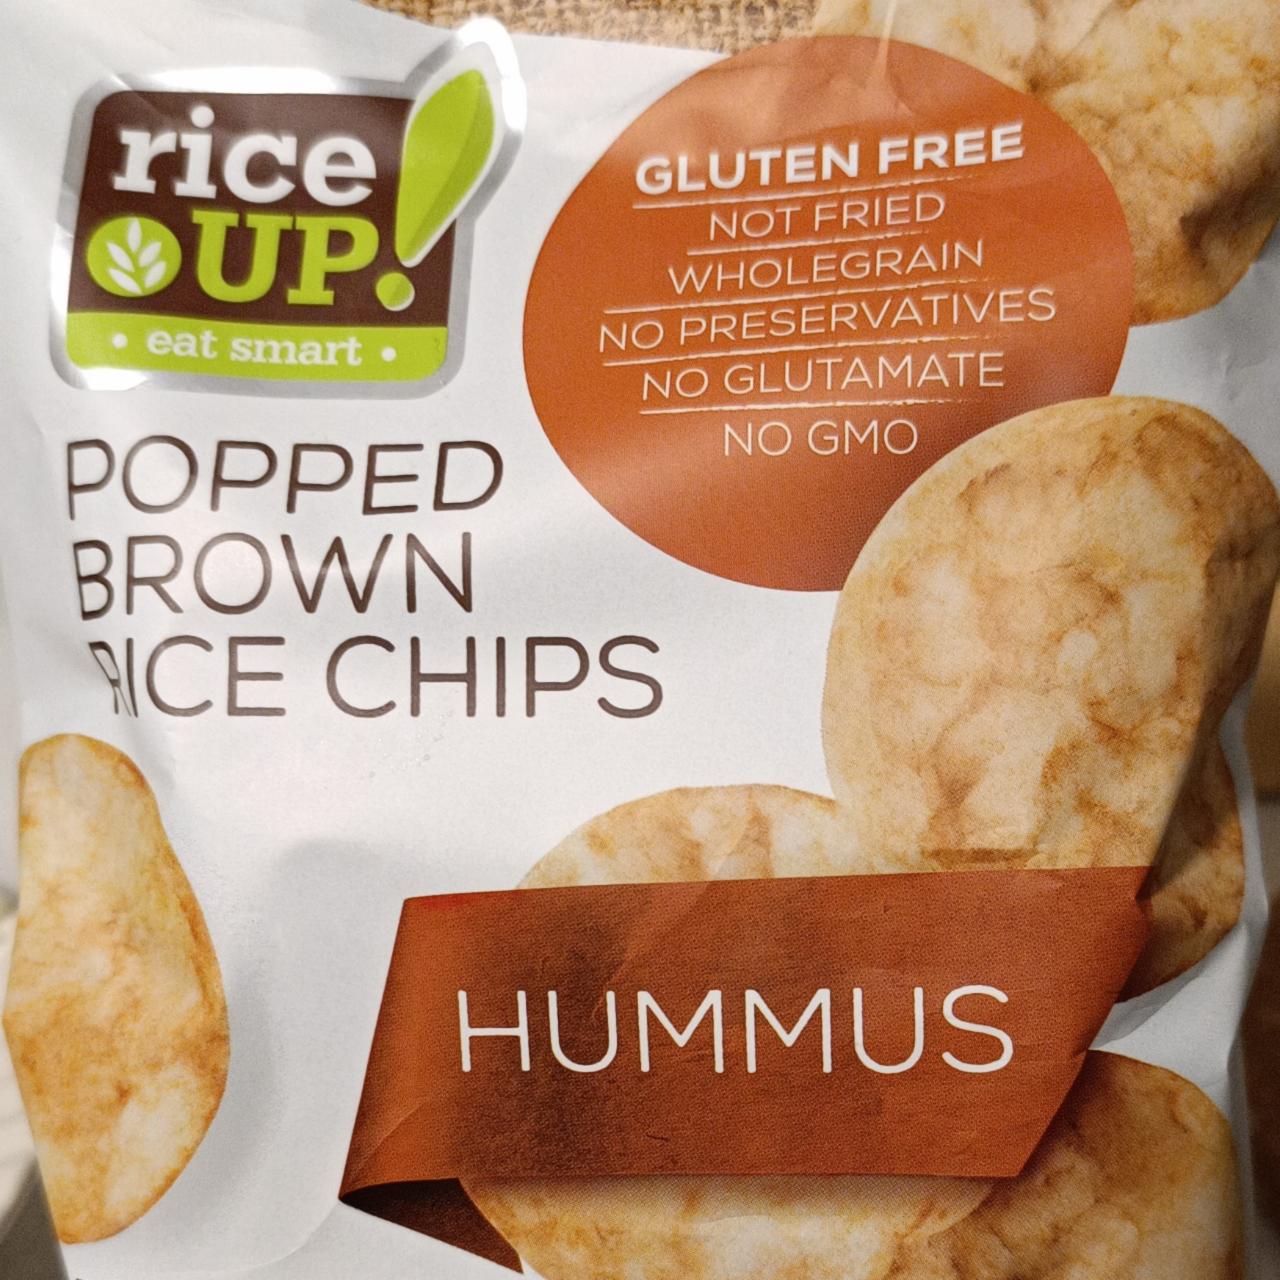 Képek - Popped brown rice chips HUMMUS Rice Up!